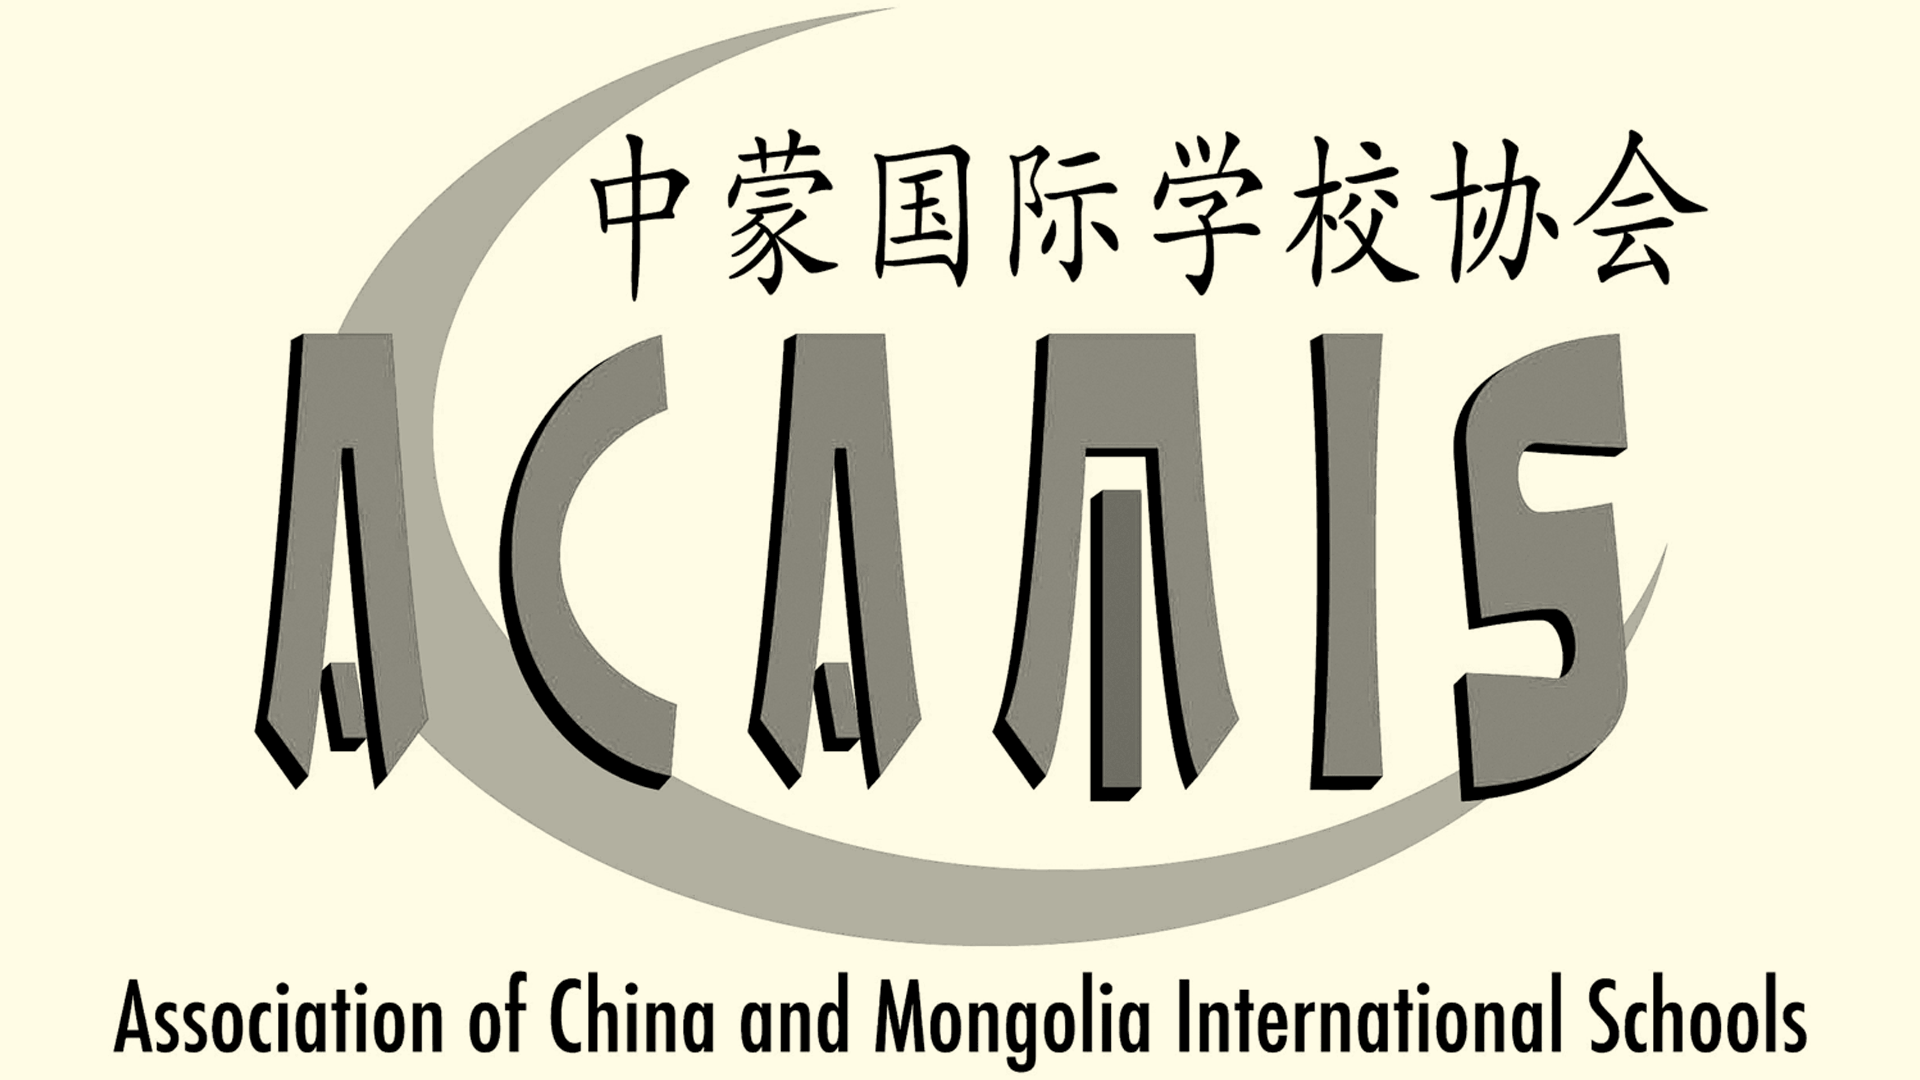 Association of China and Mongolia International Schools logo